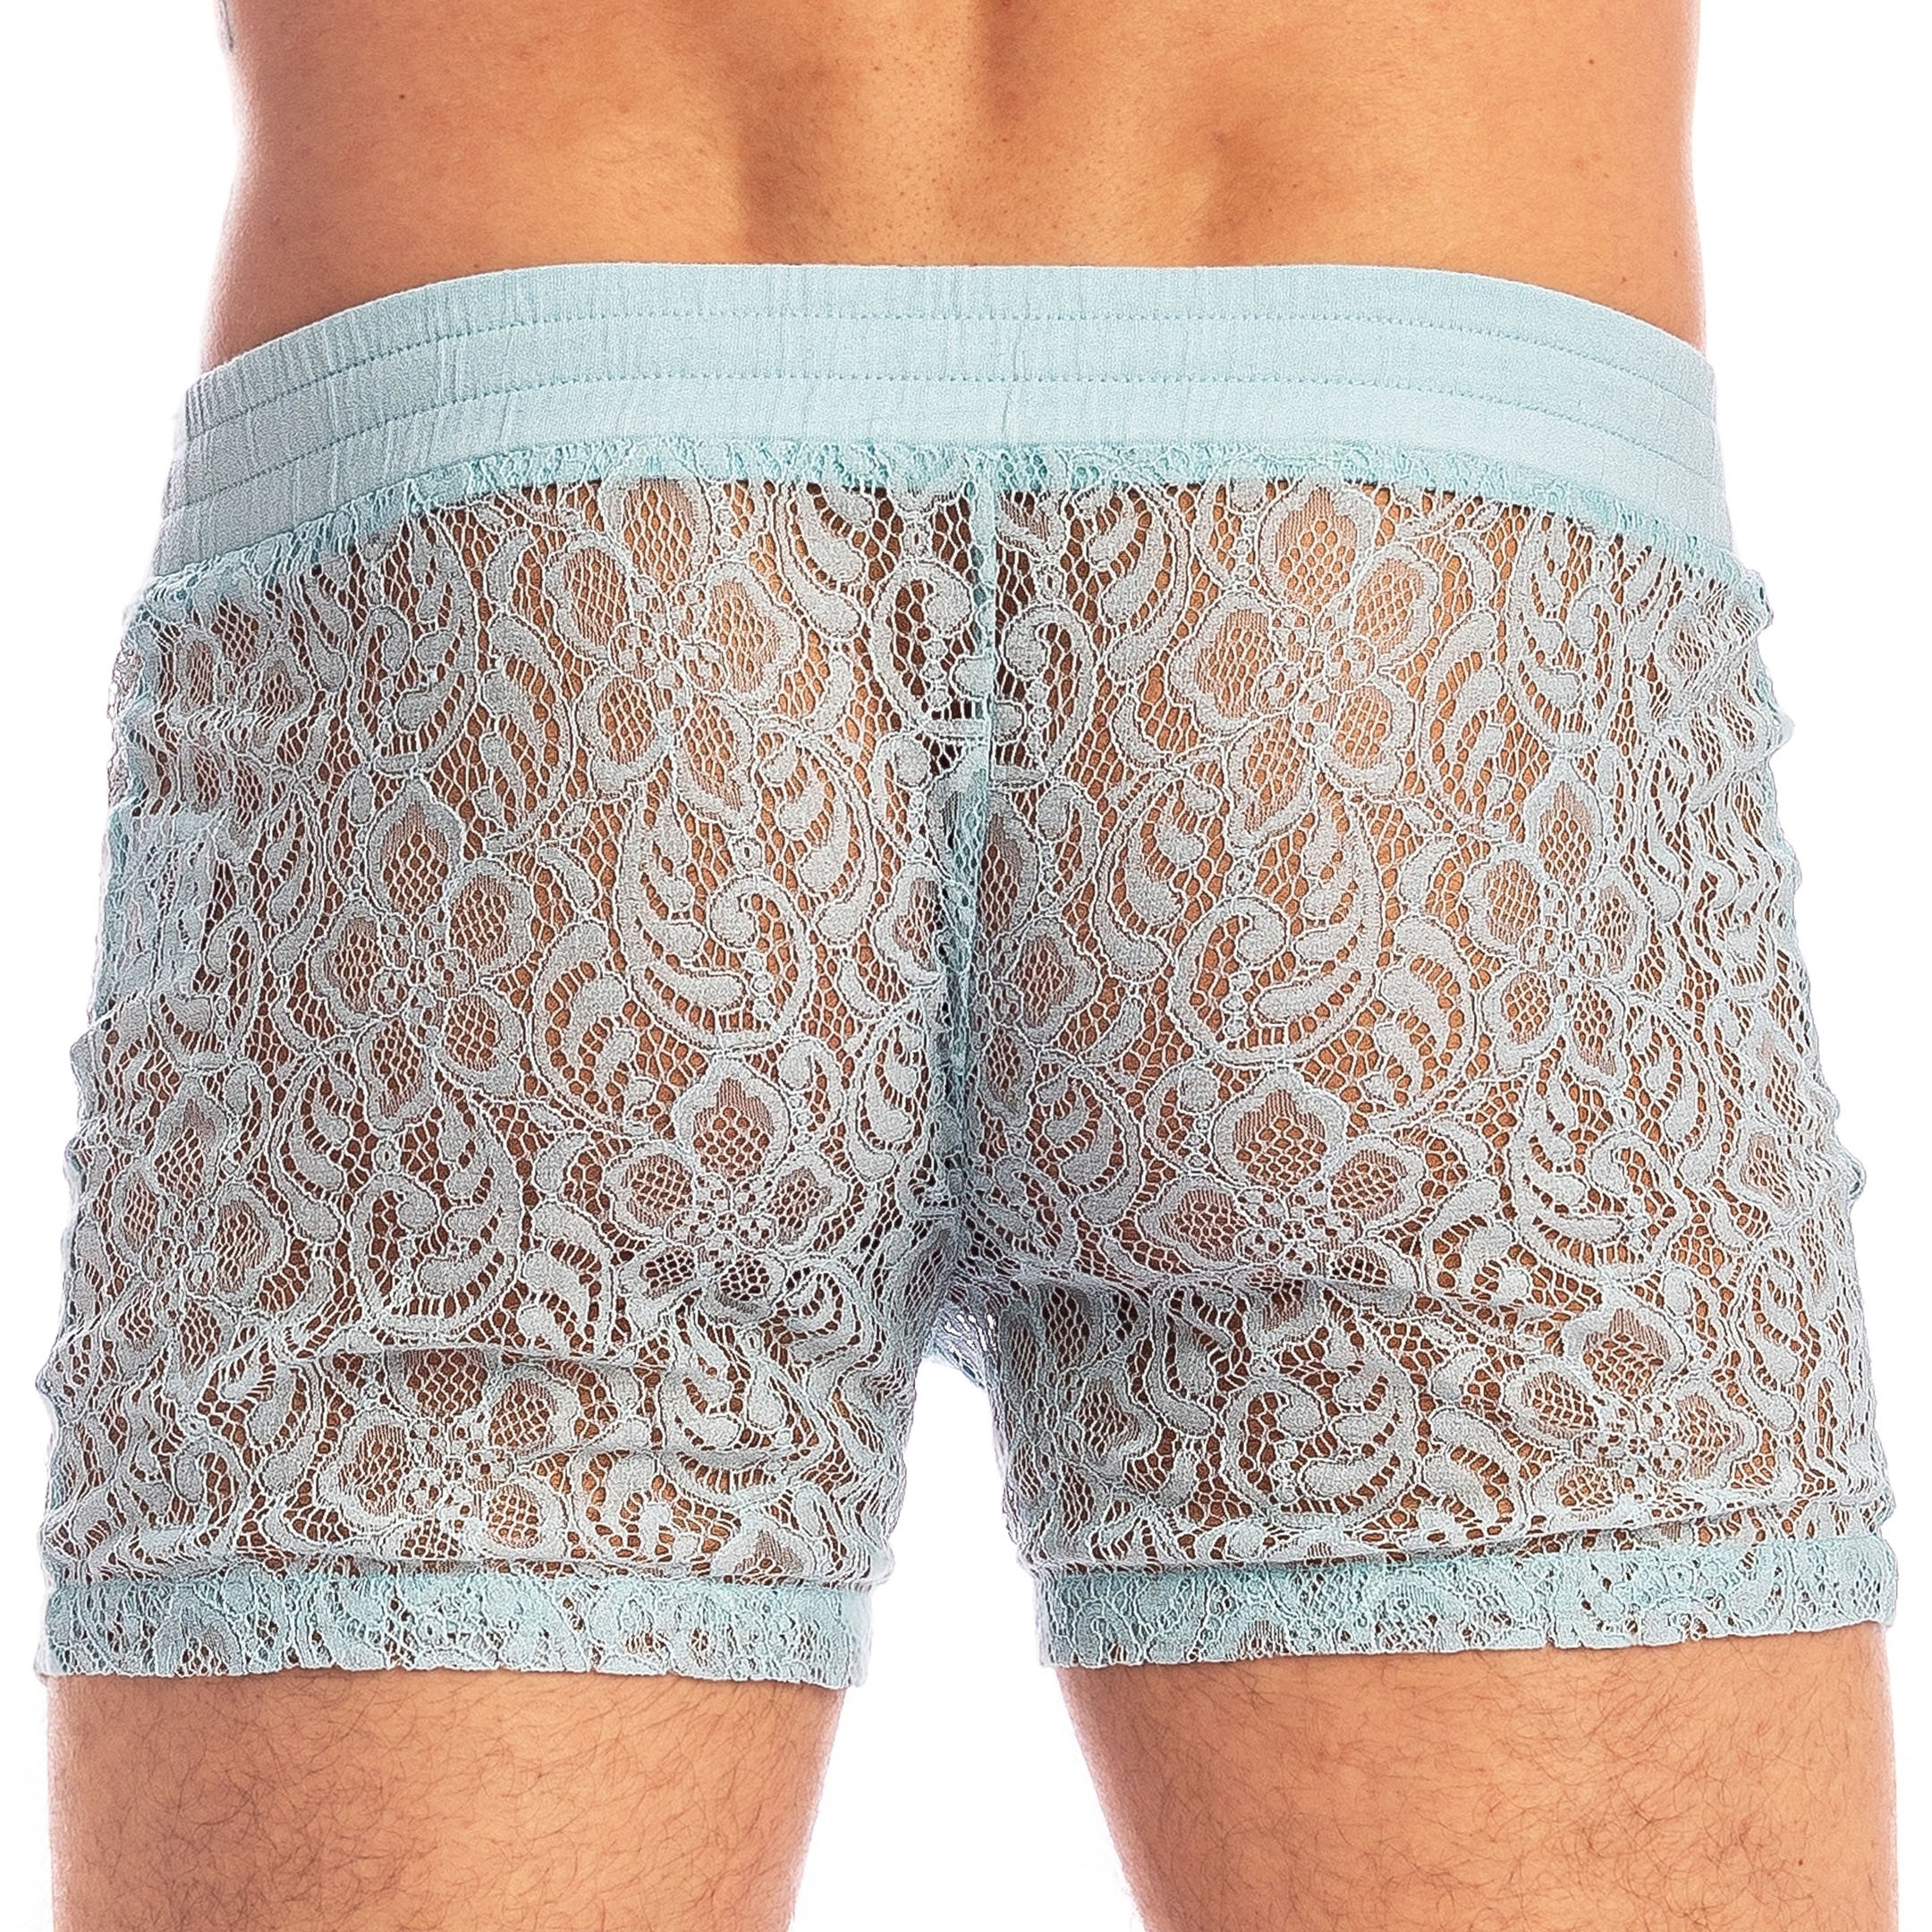 Cristallo - Lounge Shorts Men's sheer see-through Shorts in light